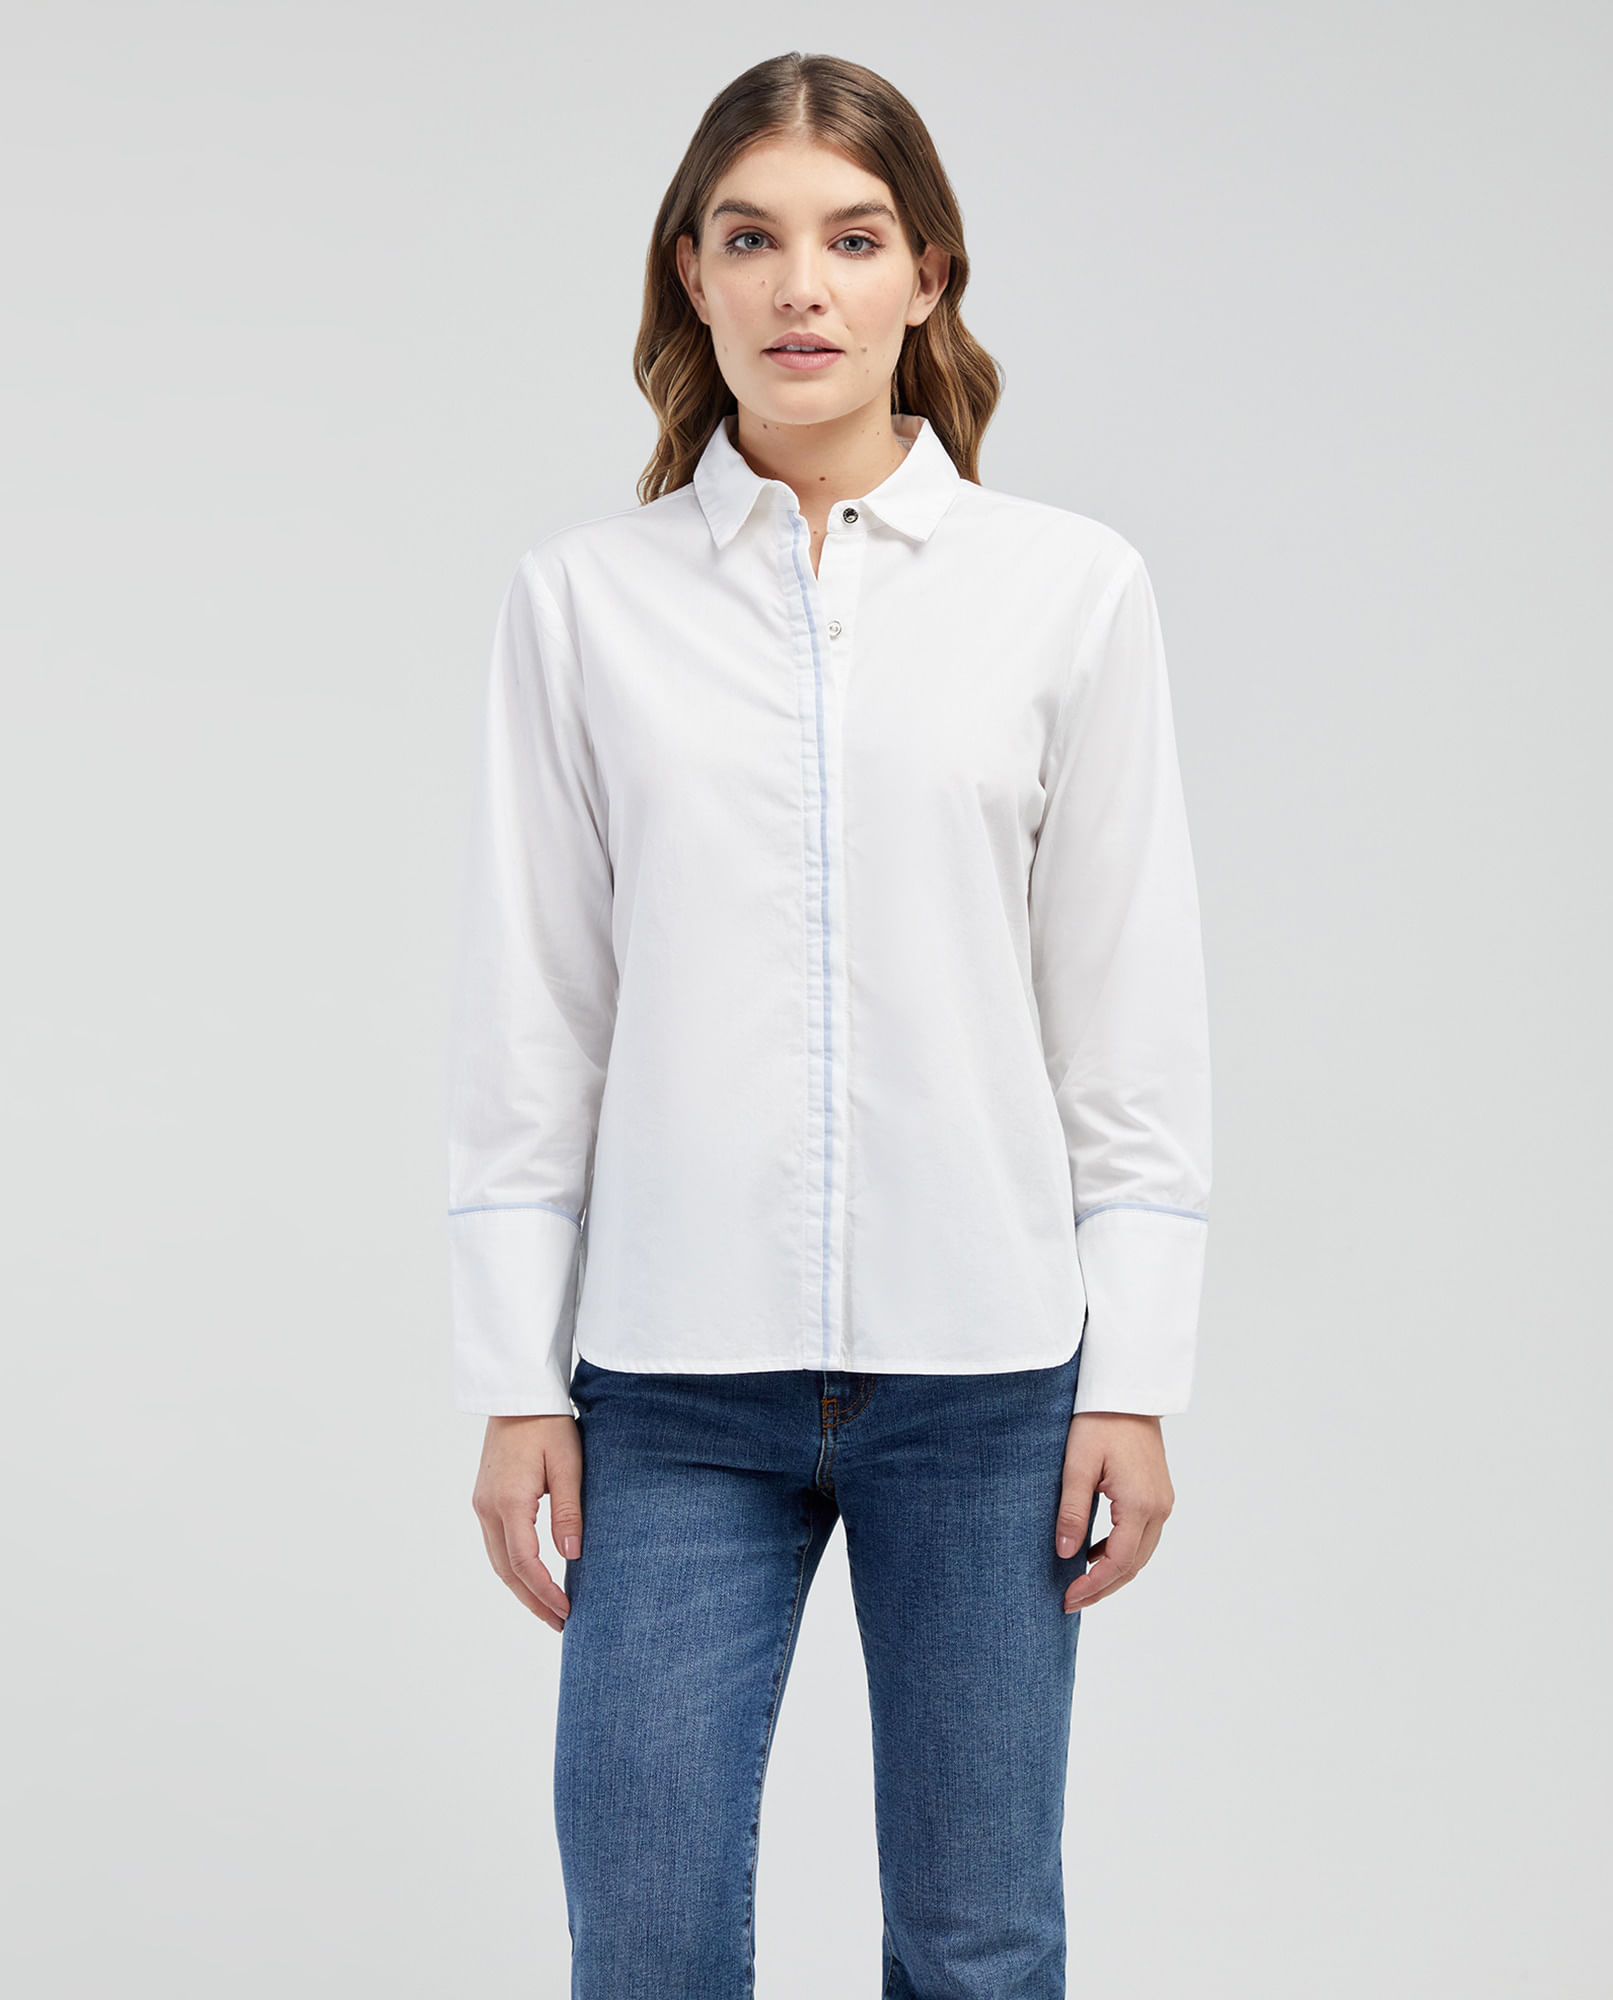 Camisas con botones para mujer camisa de manga larga con solapa de